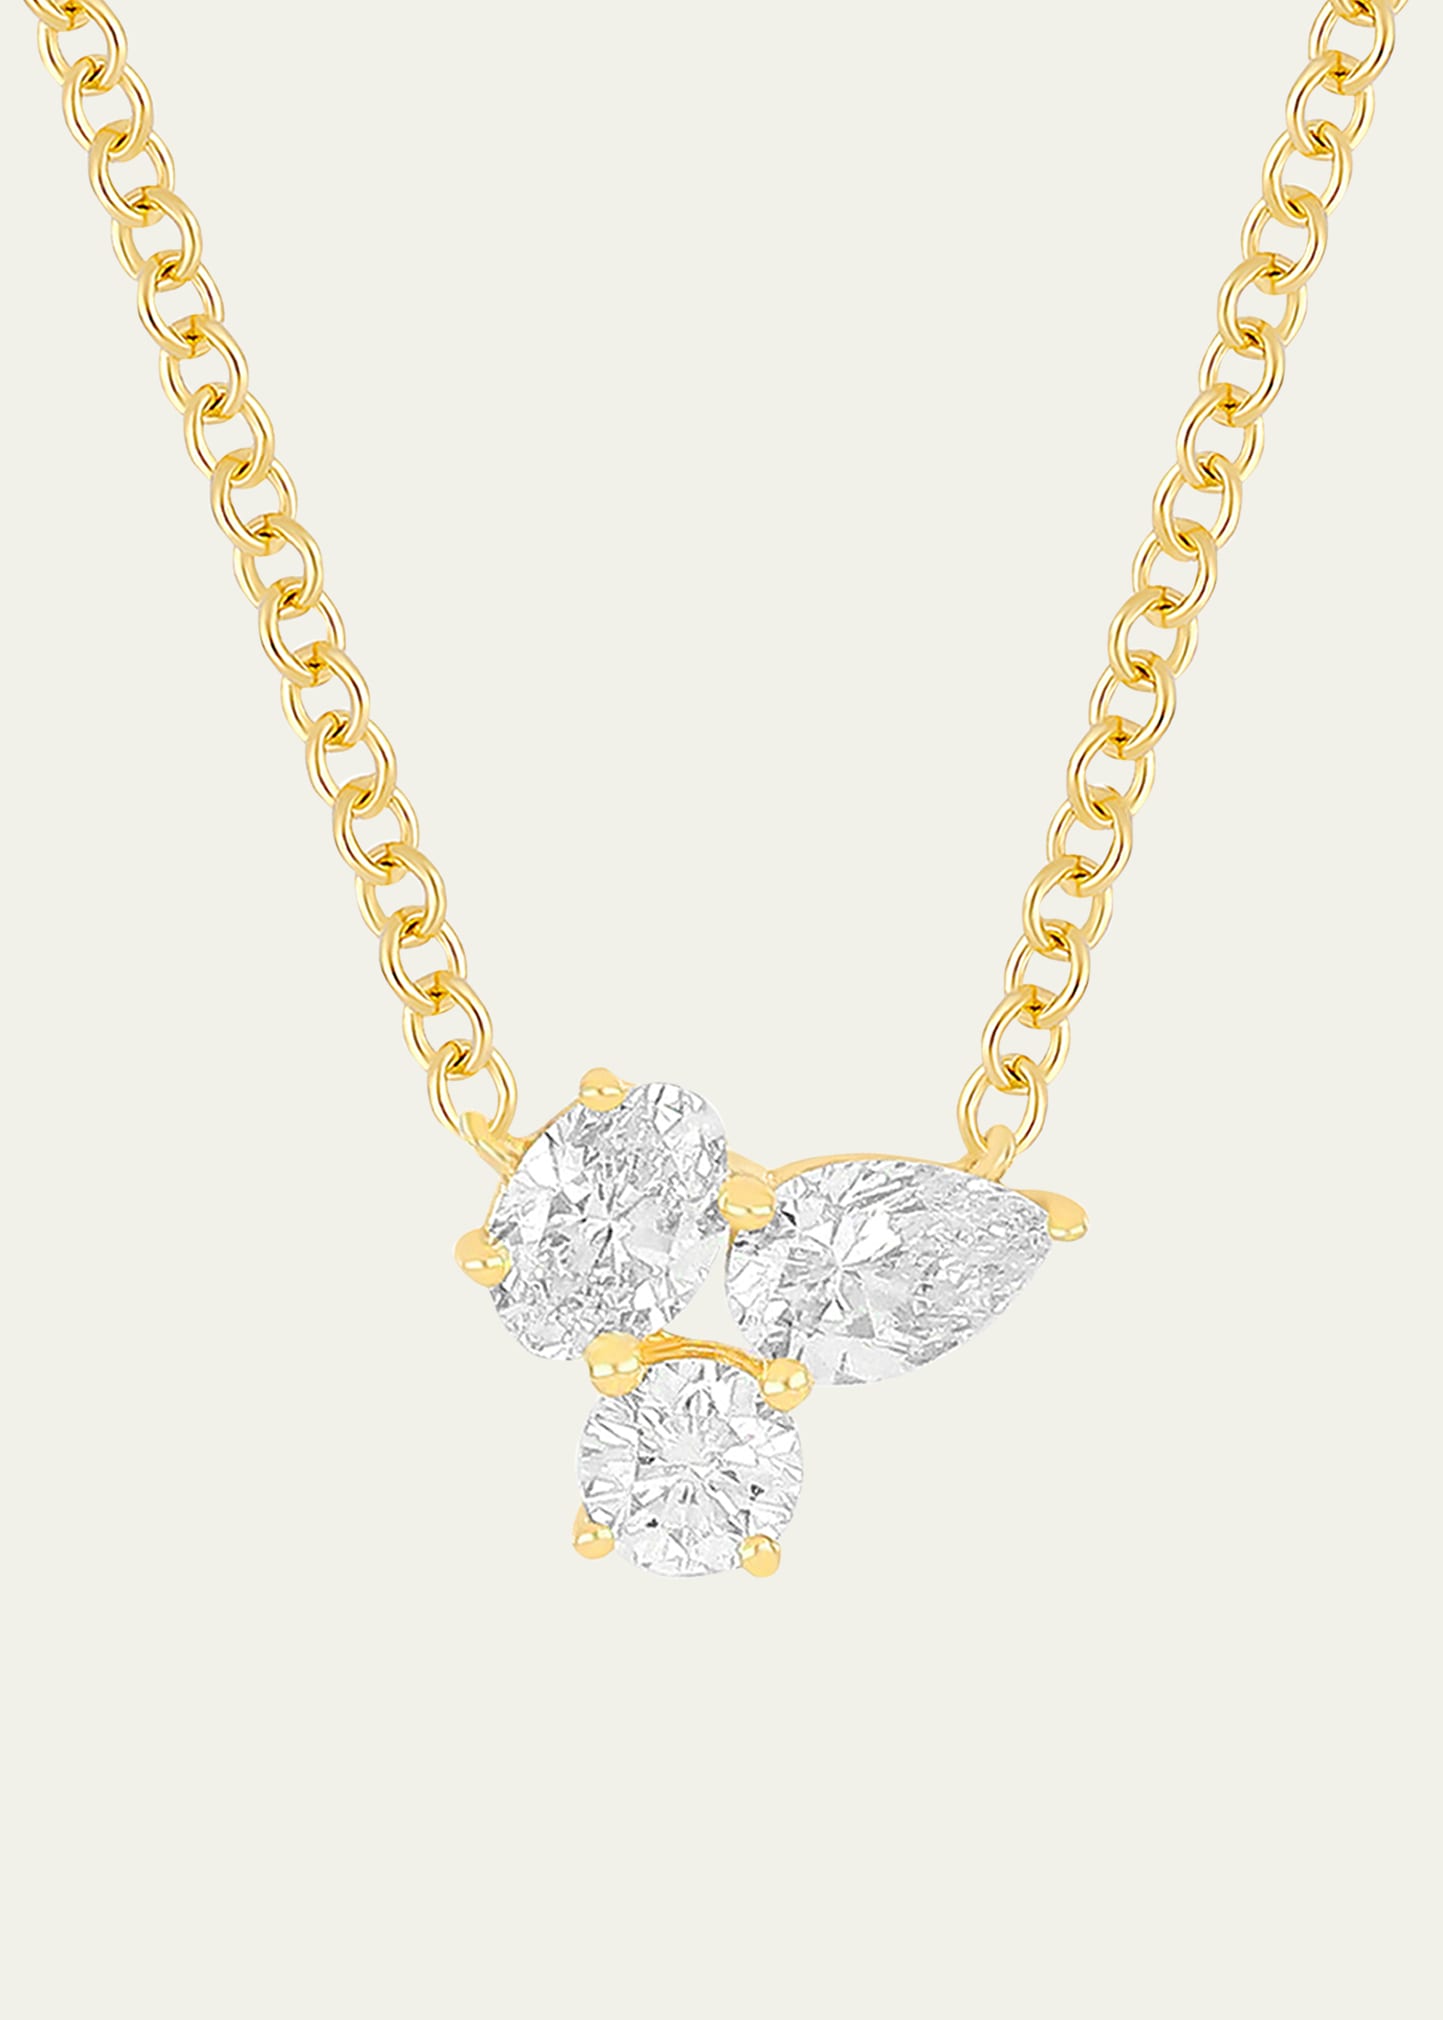 Triple Diamond Cluster Necklace